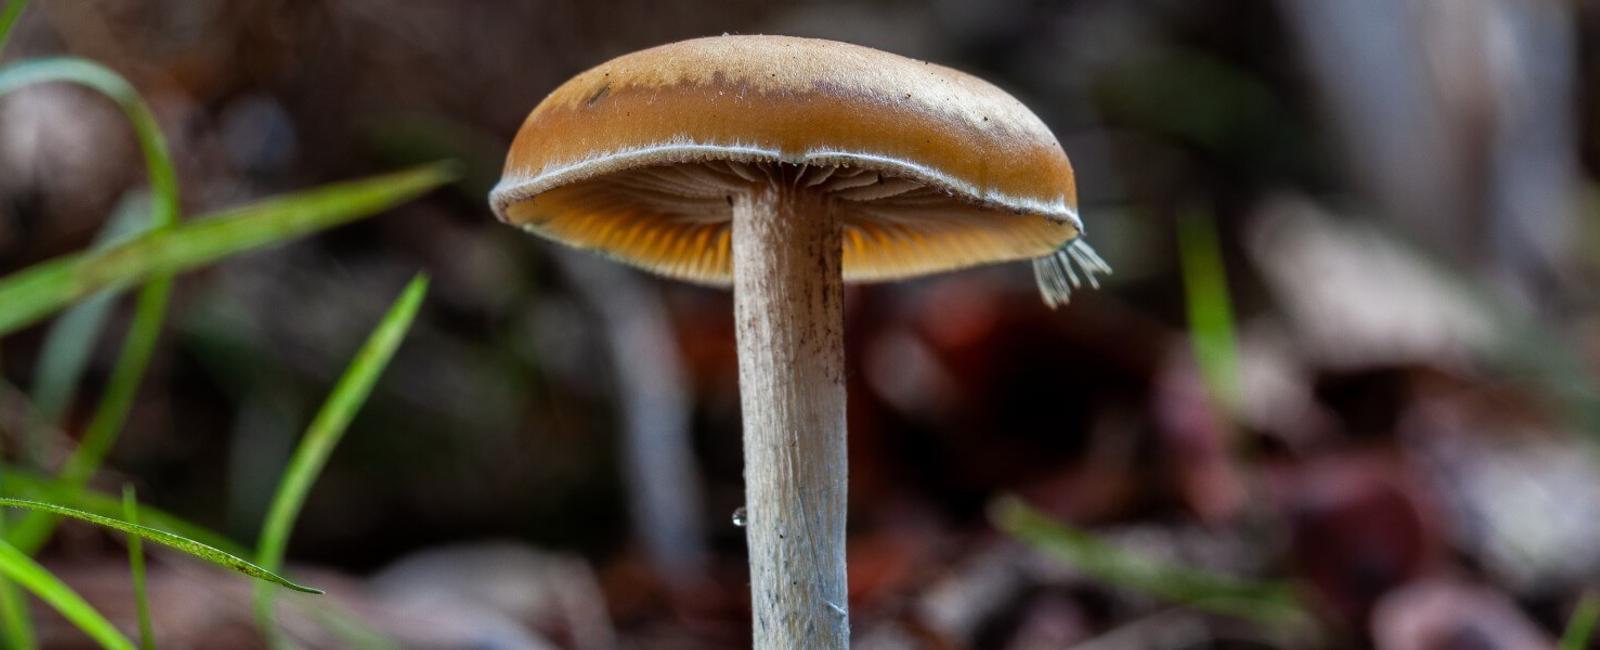 The Complete Guide to "Subs," Psilocybe Subaeruginosa Mushrooms